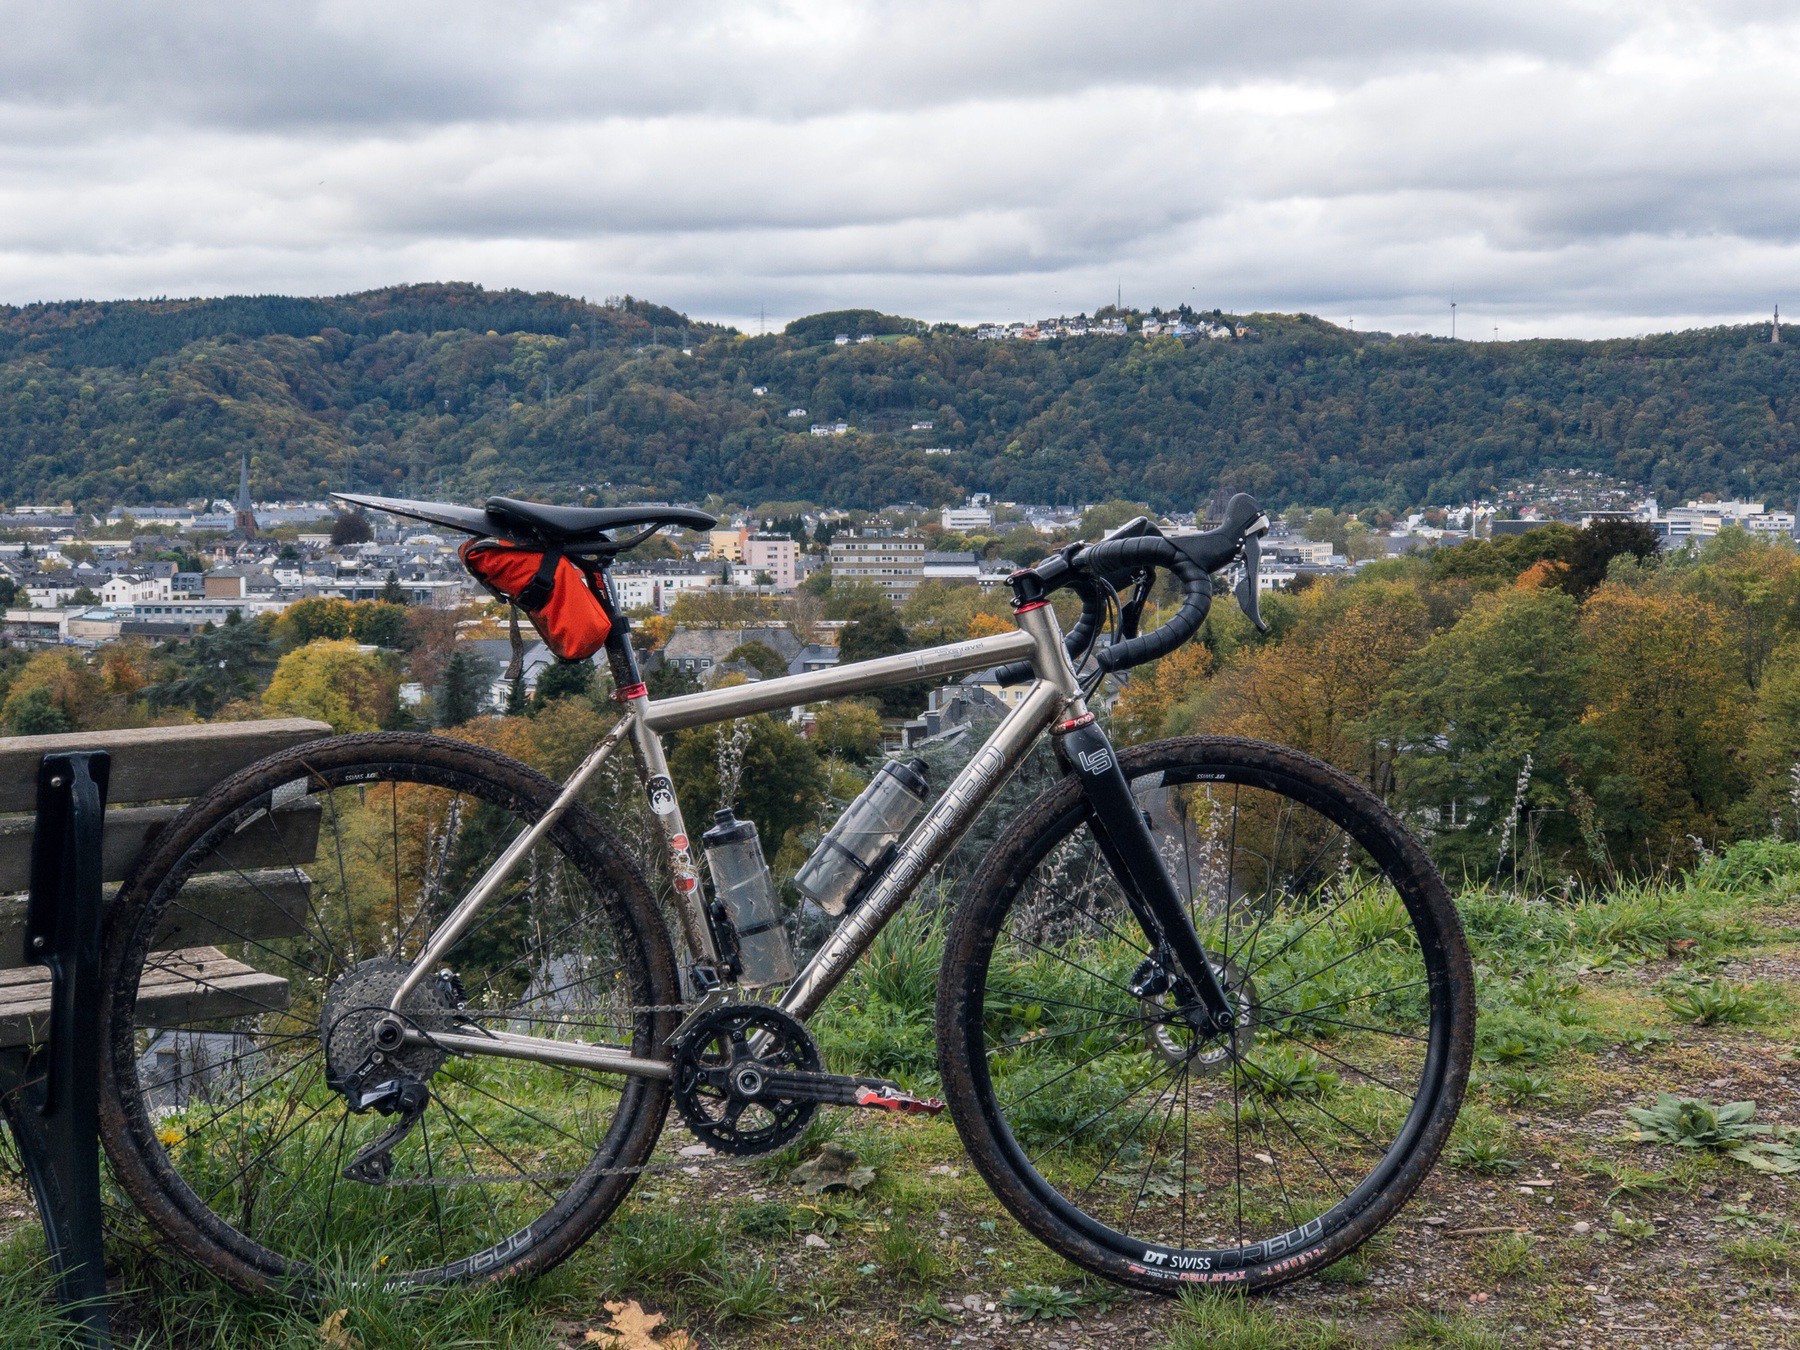 My gravel bike "Battle Cat" in front of Trier's city scape